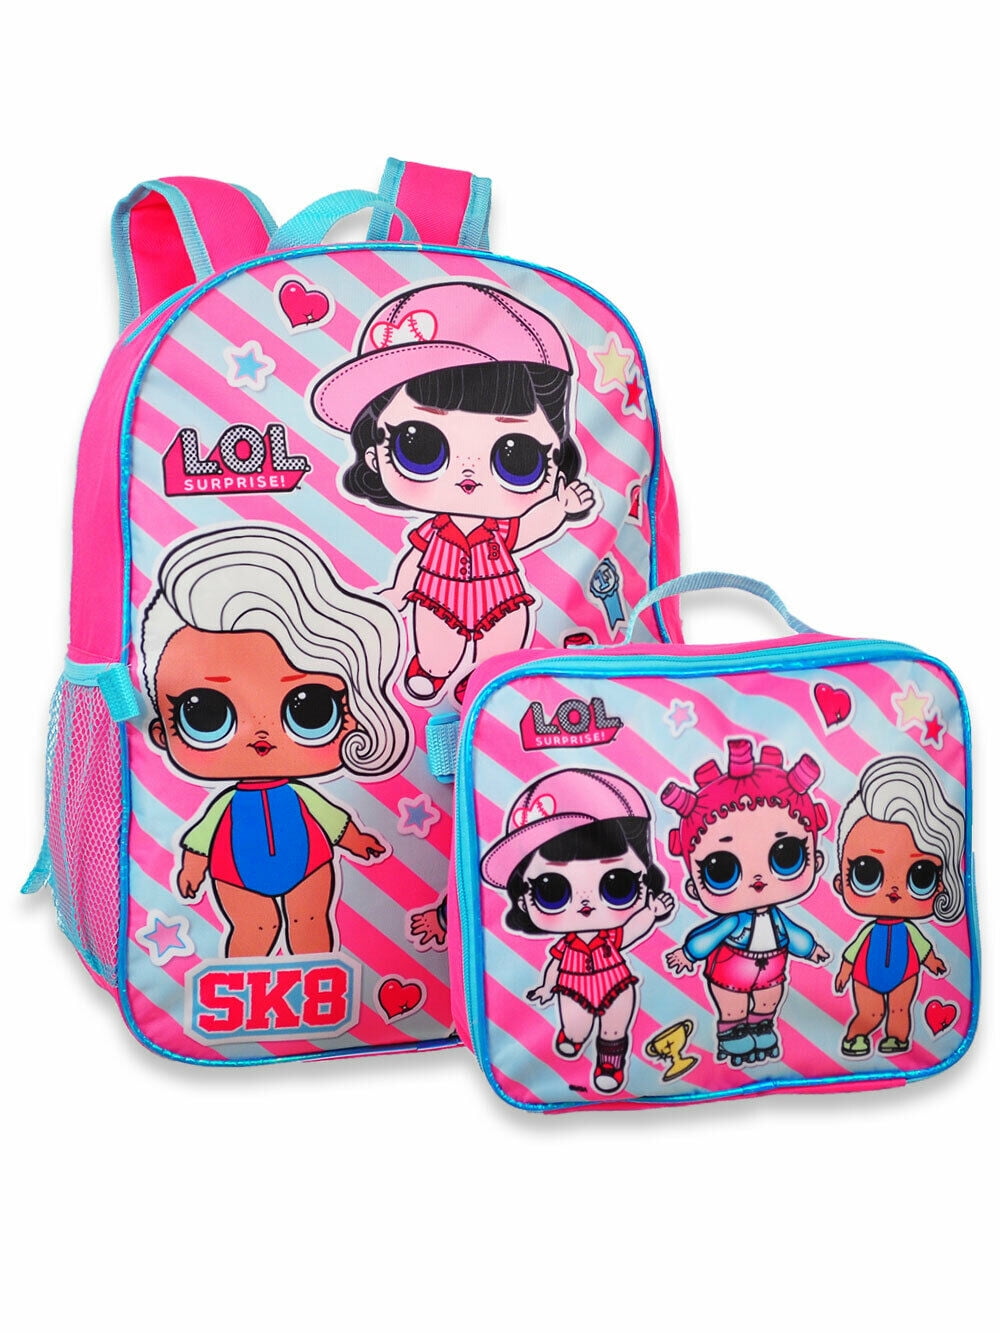 L.O.L Surprise lol Girls Kids Toddler Baby School Book bag Backpack Gift Toy 